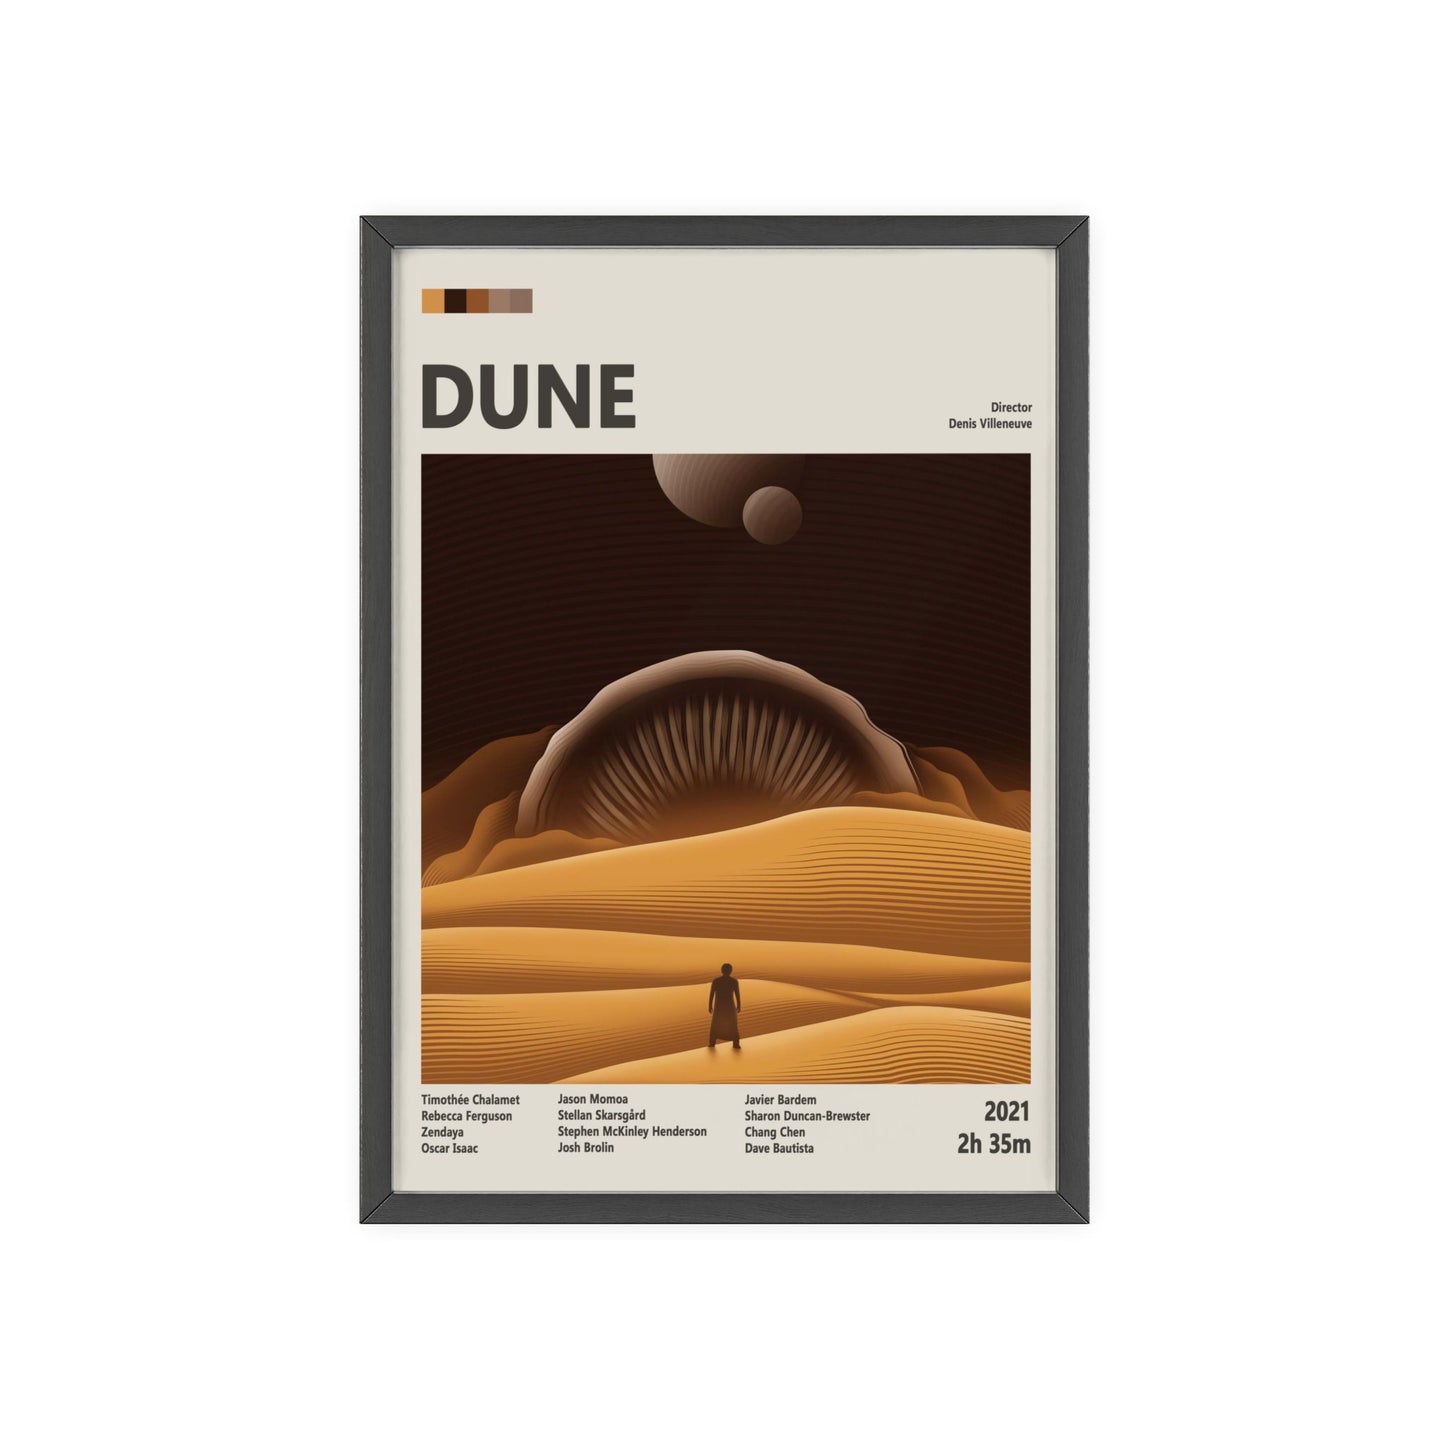 Dune Movie Poster 2021